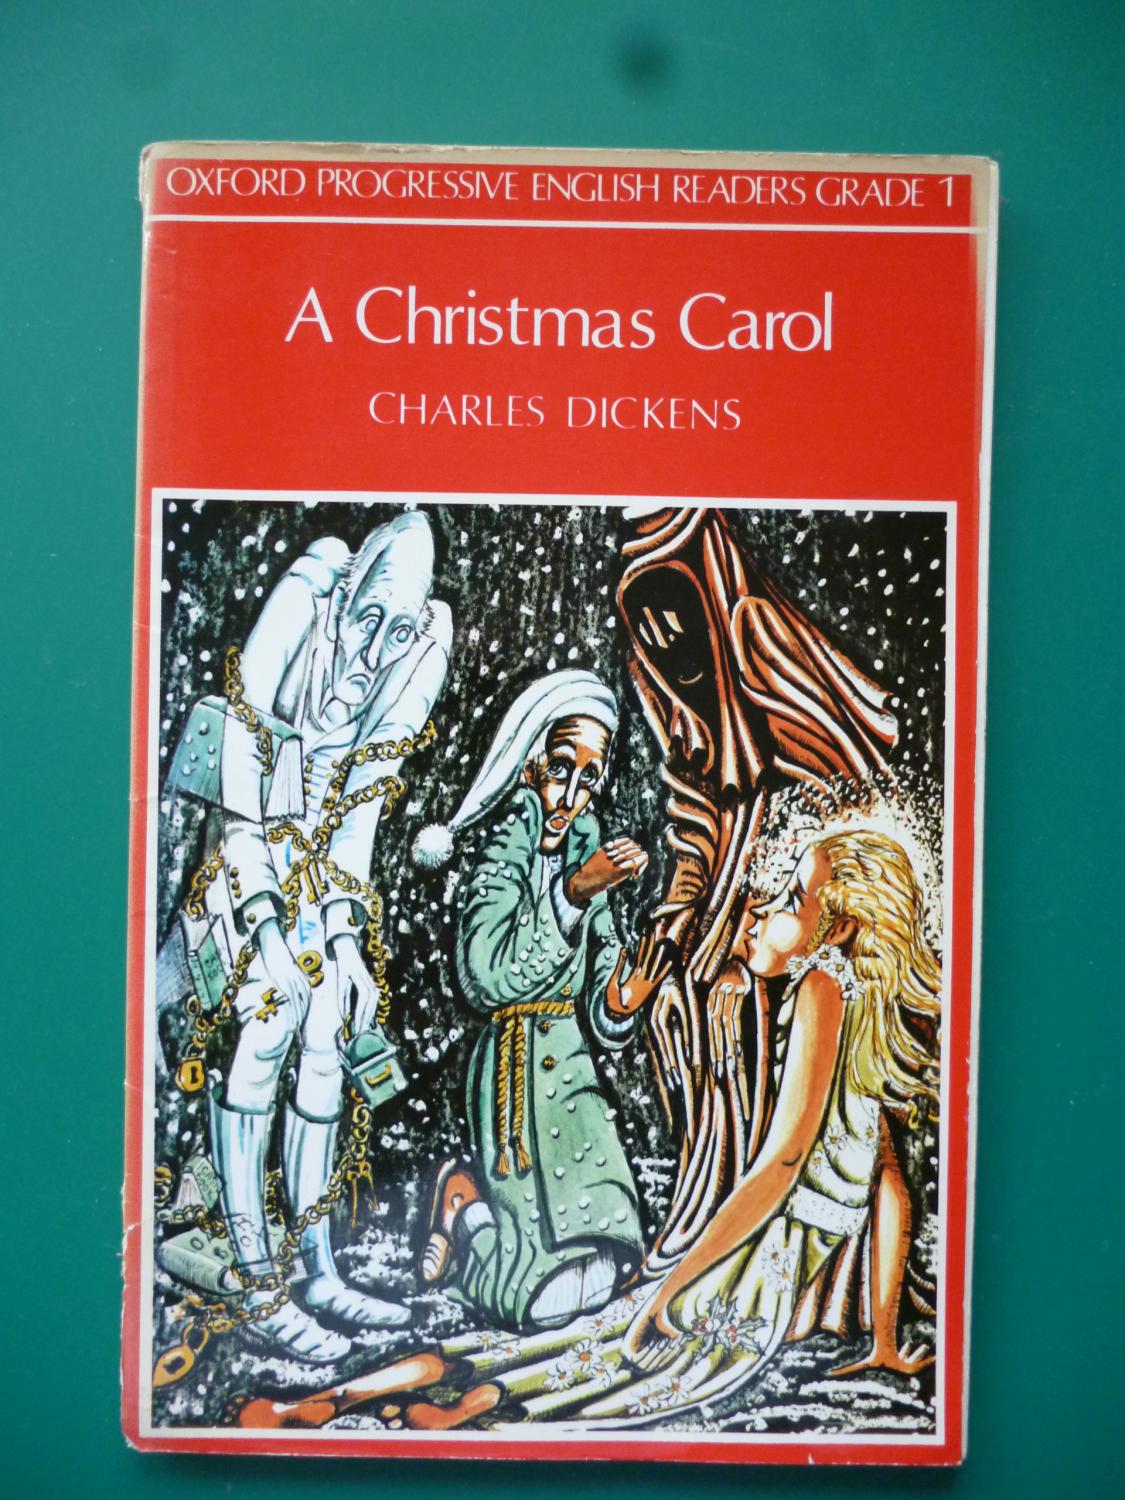 A Christmas Carol (Oxford Progressive English Readers Grade 1) - Charles Dickens